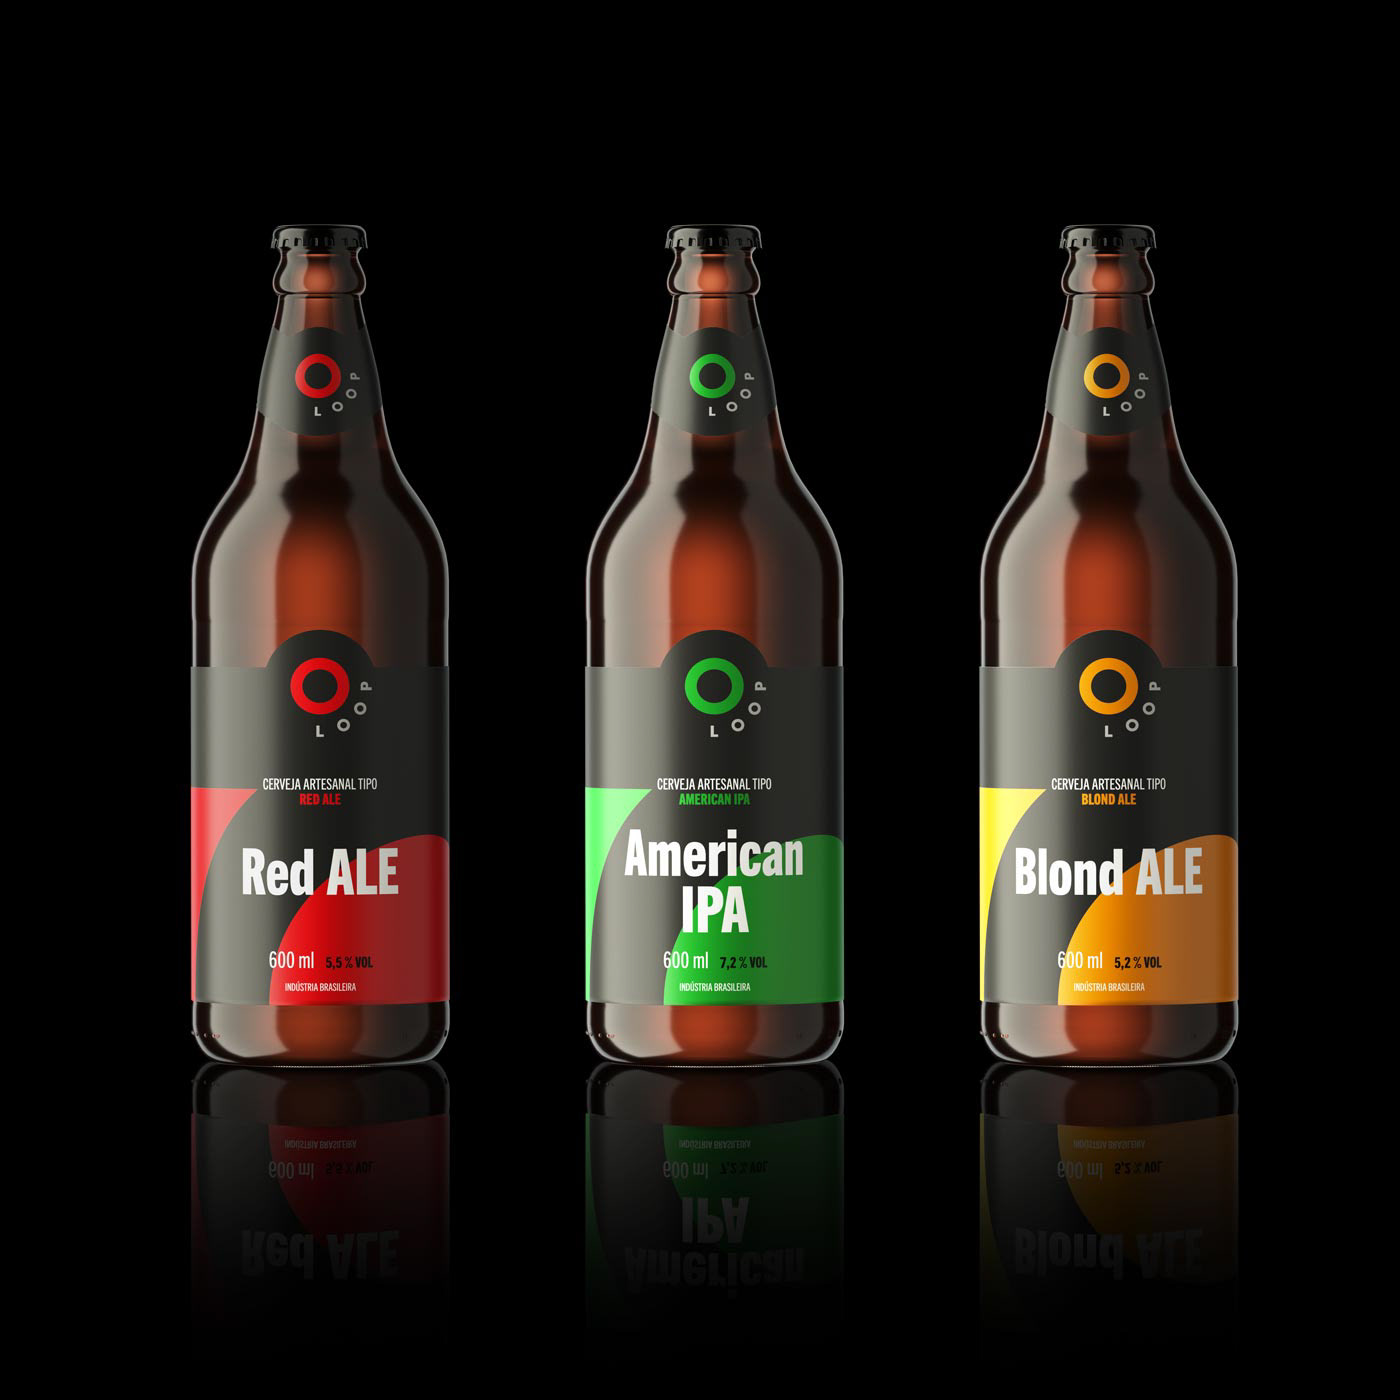 3D Render 3dmodel beer bottle industrial design packing branding  Digital Art 